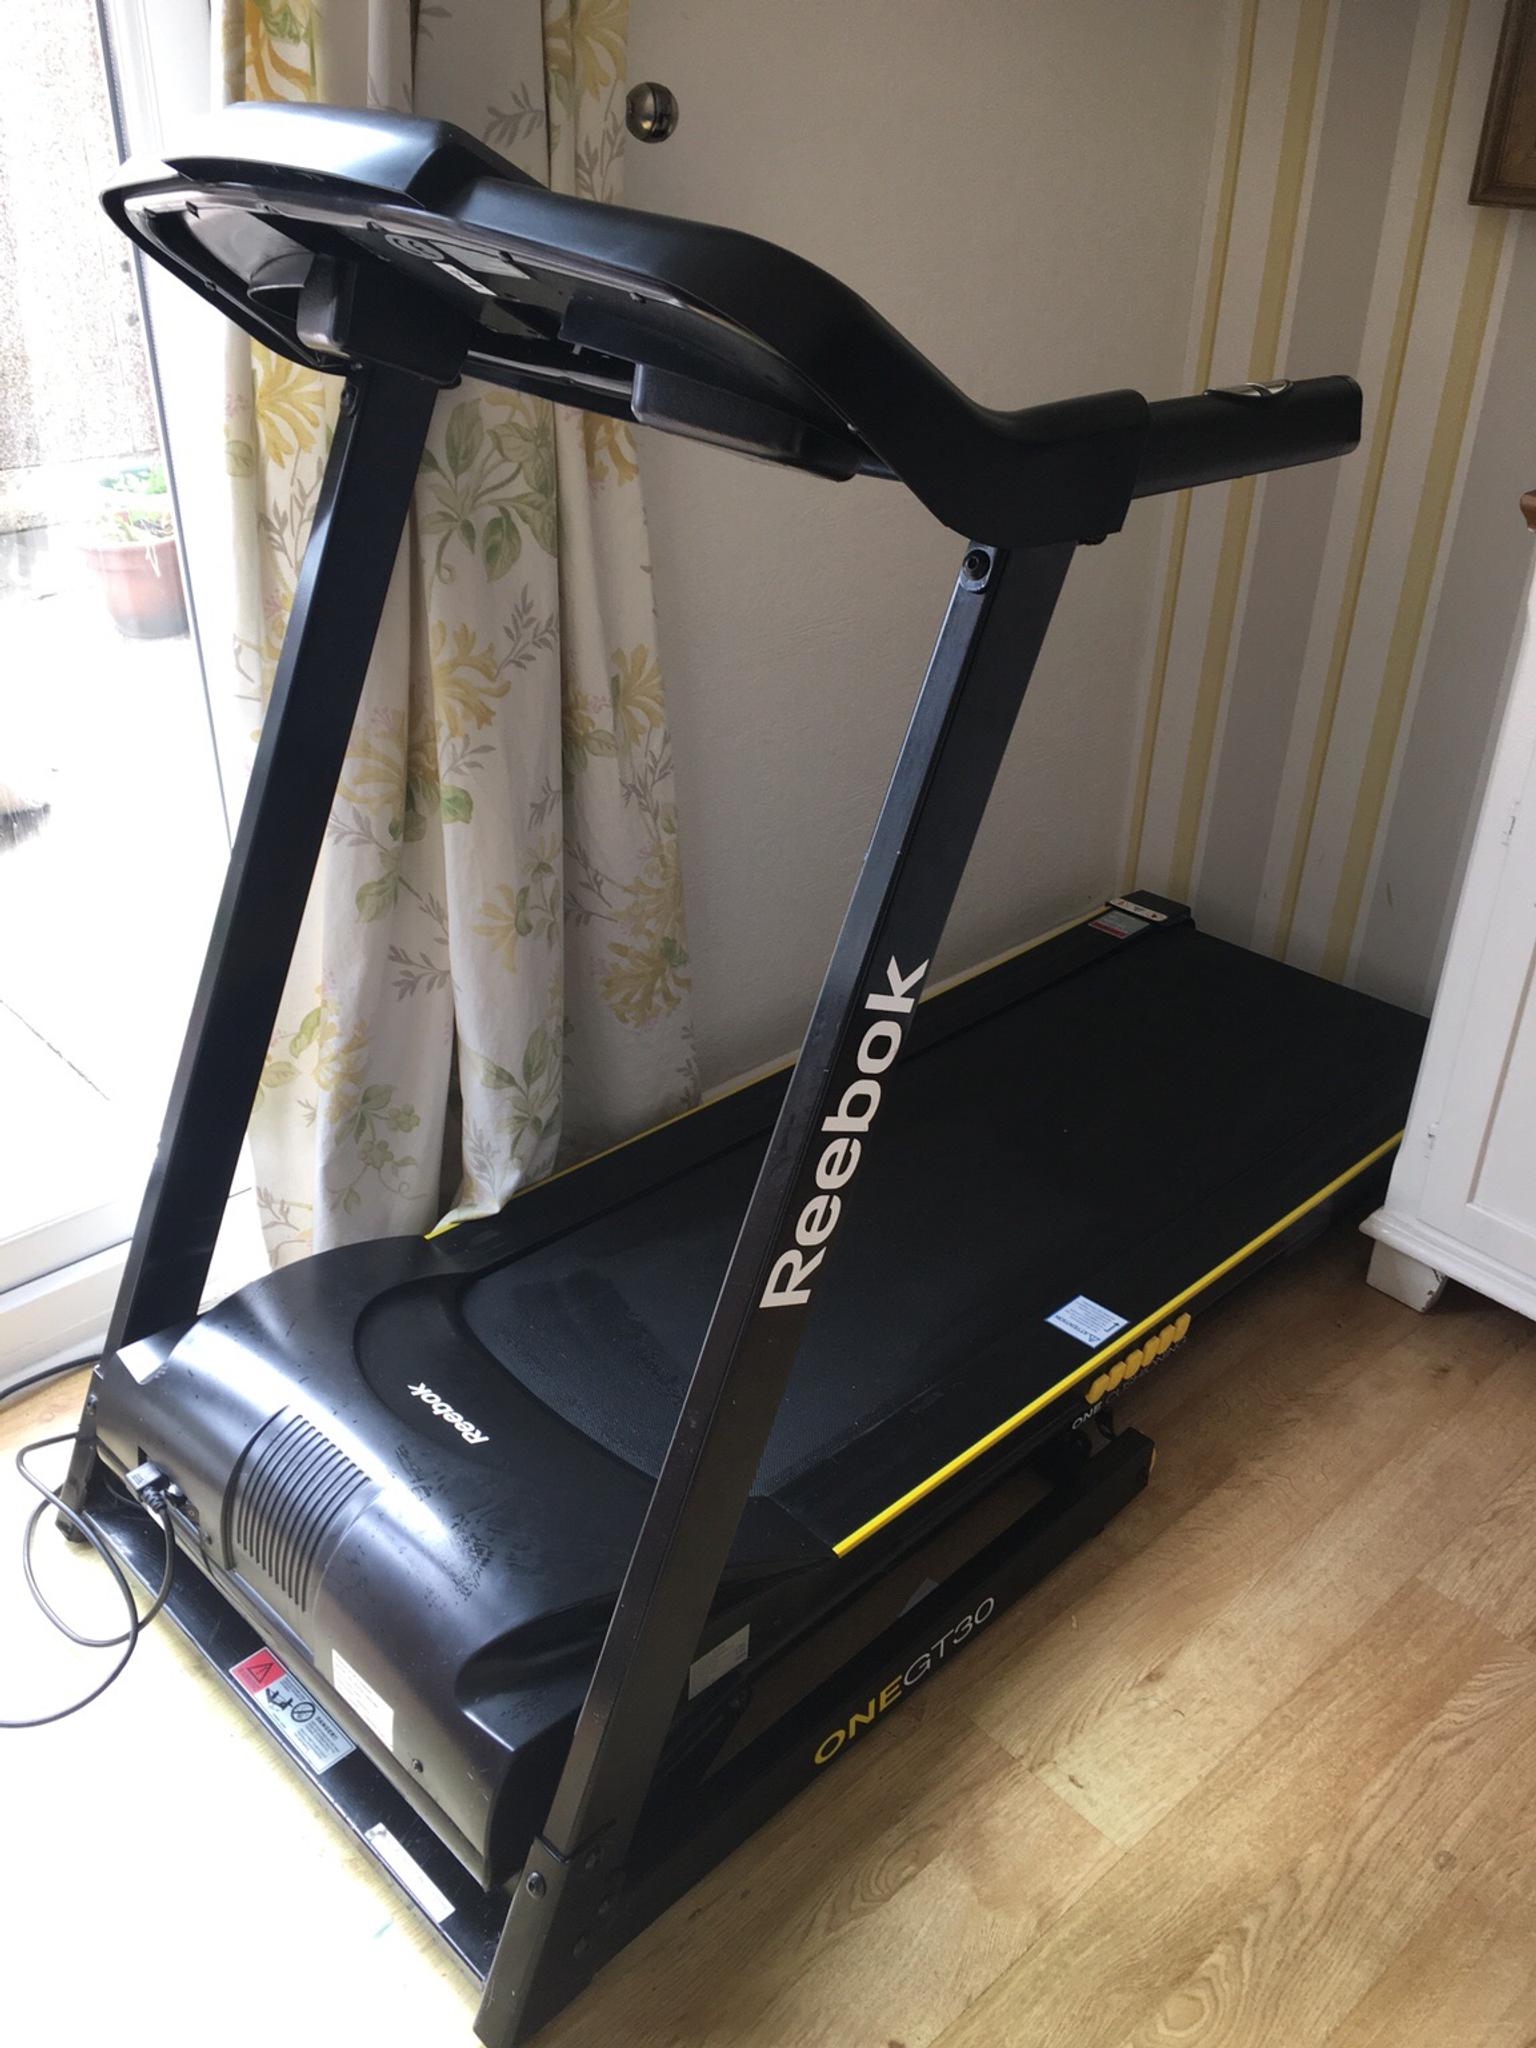 reebok one series gt30 treadmill price